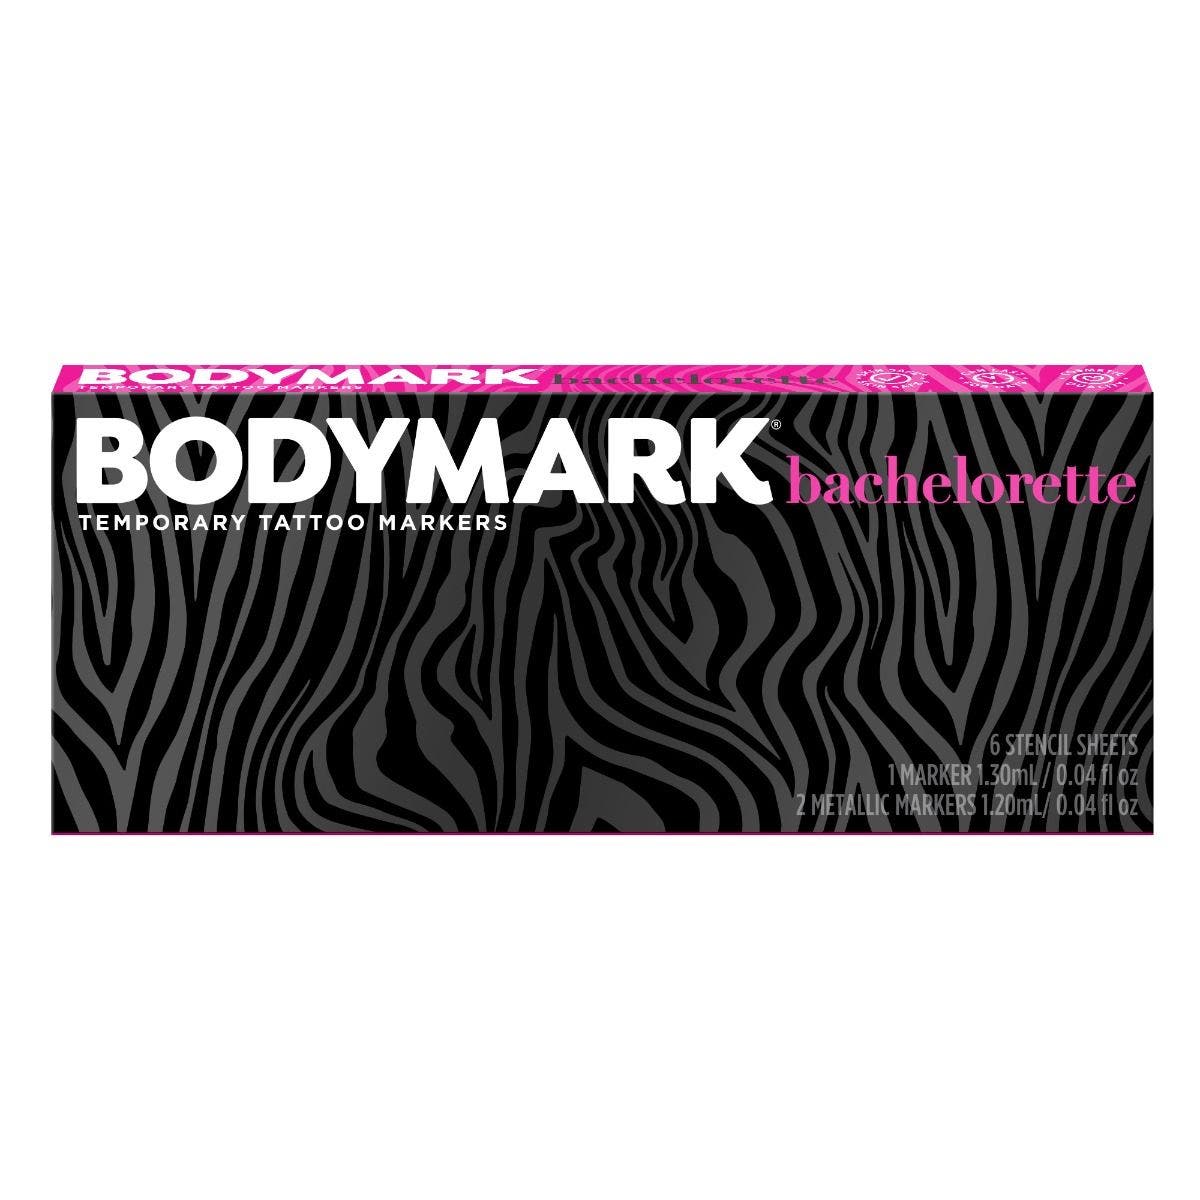 Bic BodyMark Temporary Tattoo Markers, black, 0.04 Fl Oz